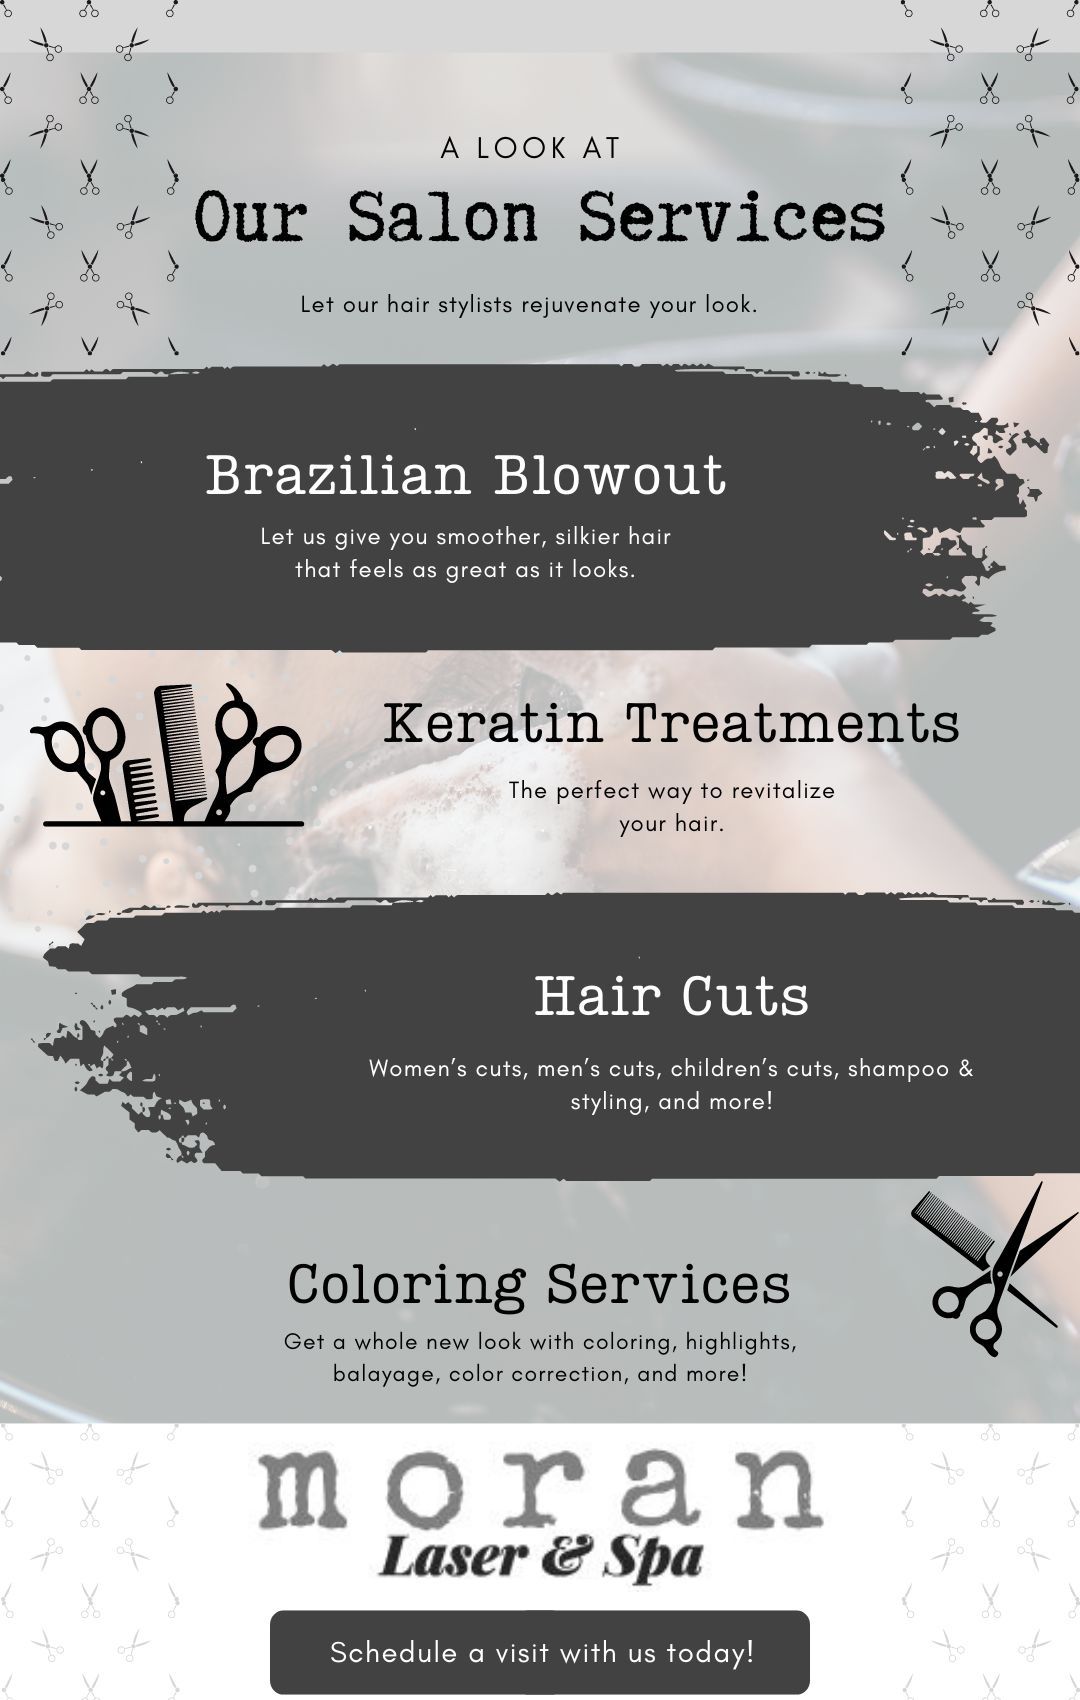 Our Salon Services infographic